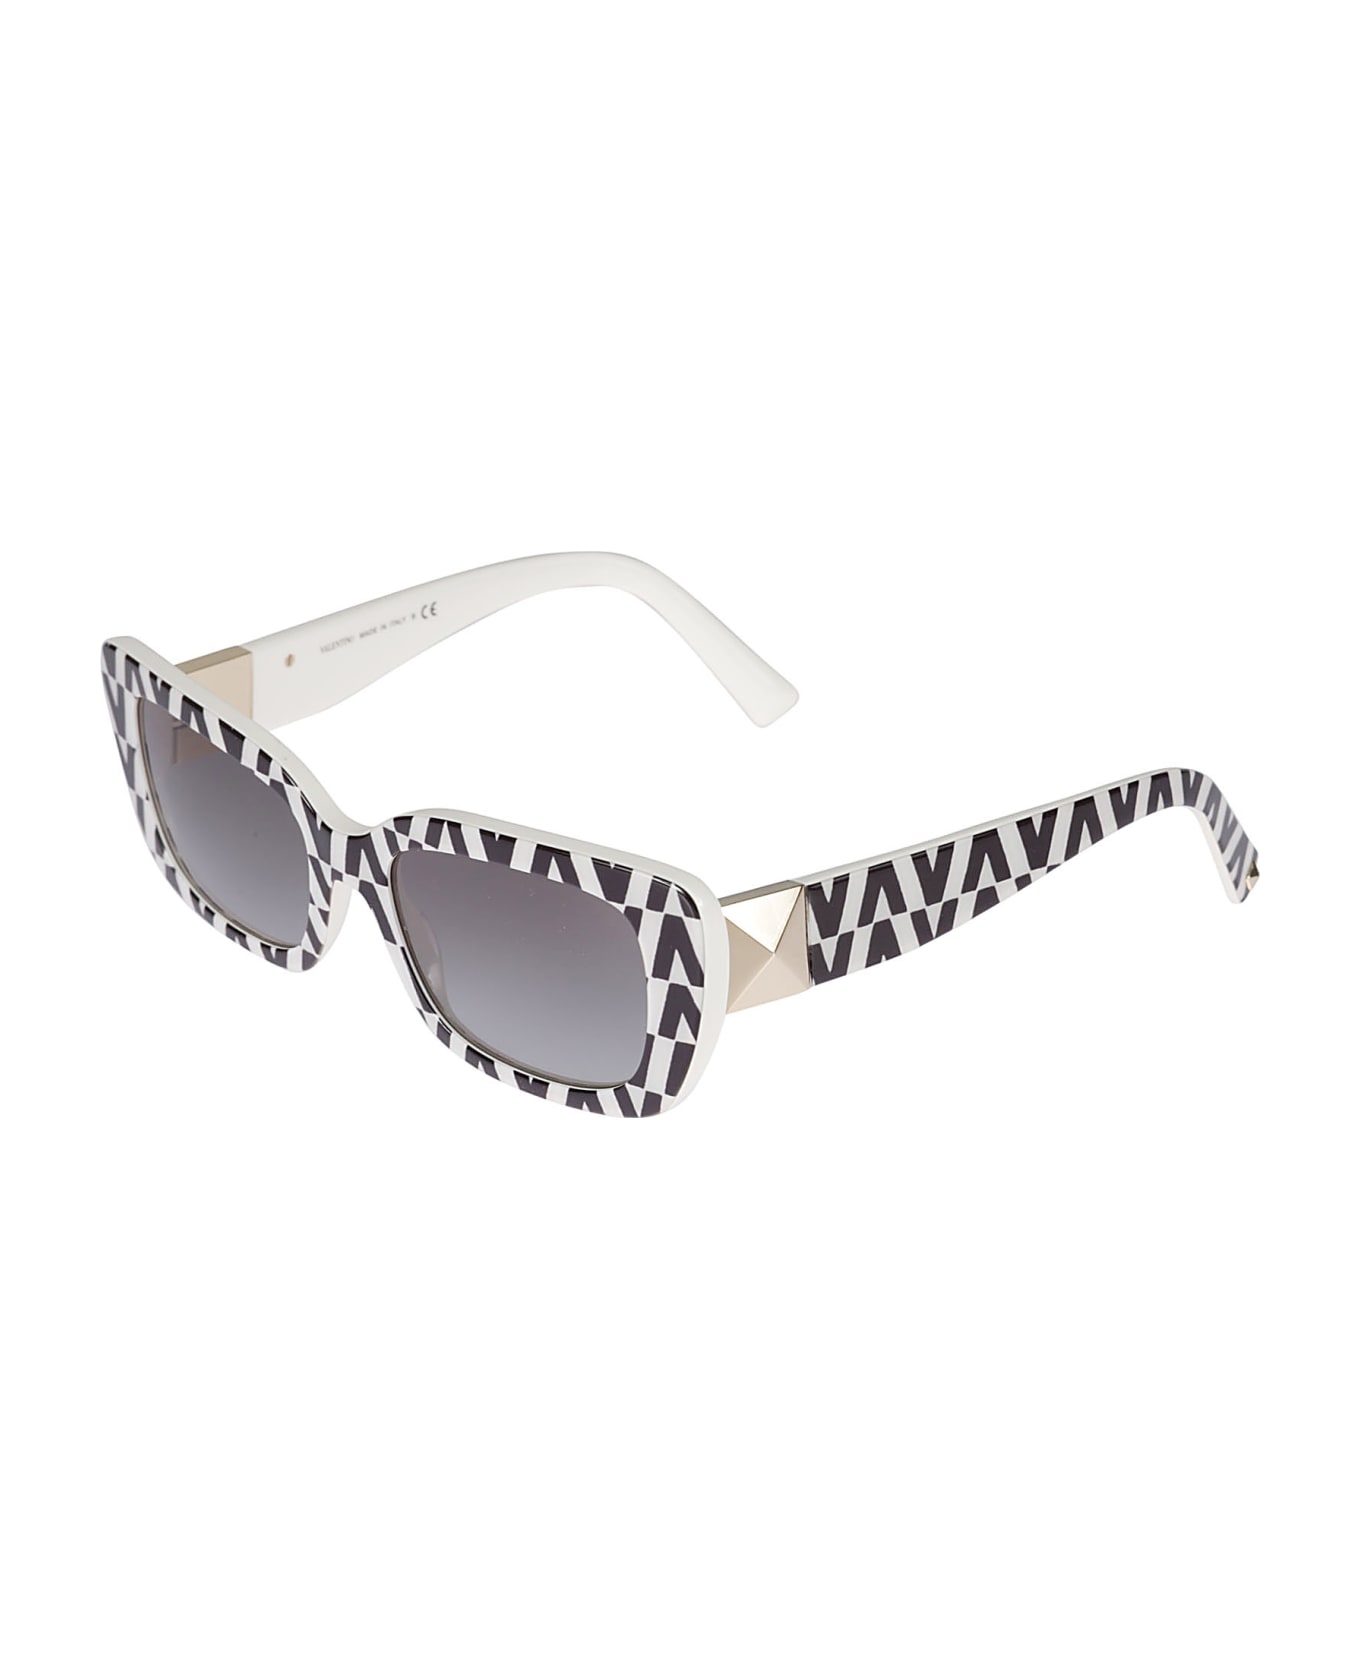 Valentino Eyewear Sole518511 Sunglasses - 518511